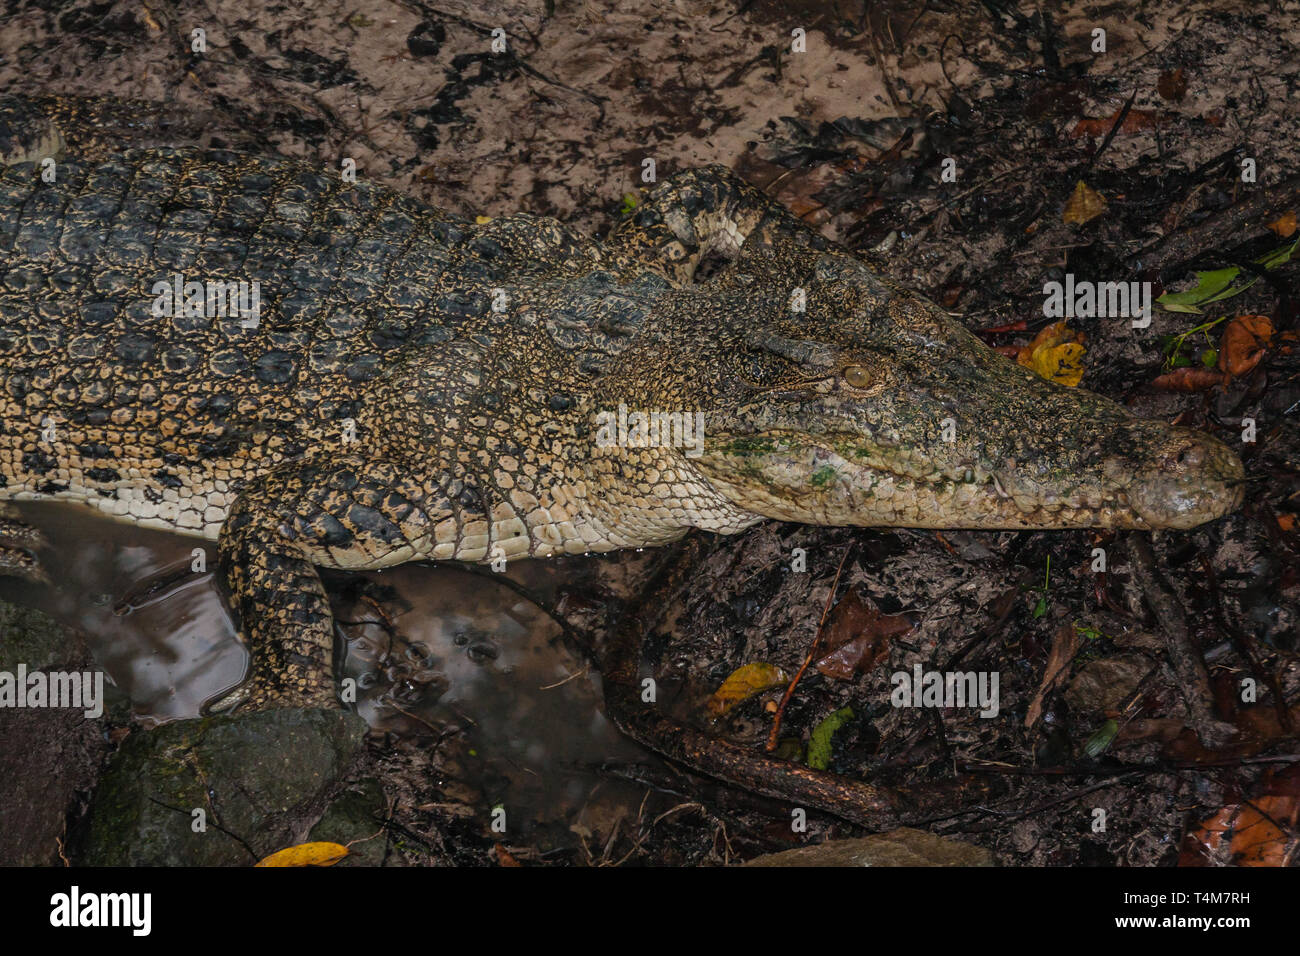 The saltwater crocodile (Crocodylus porosus) is a crocodilian native to saltwater habitats and brackish wetlands from India's east coast across Southe Stock Photo